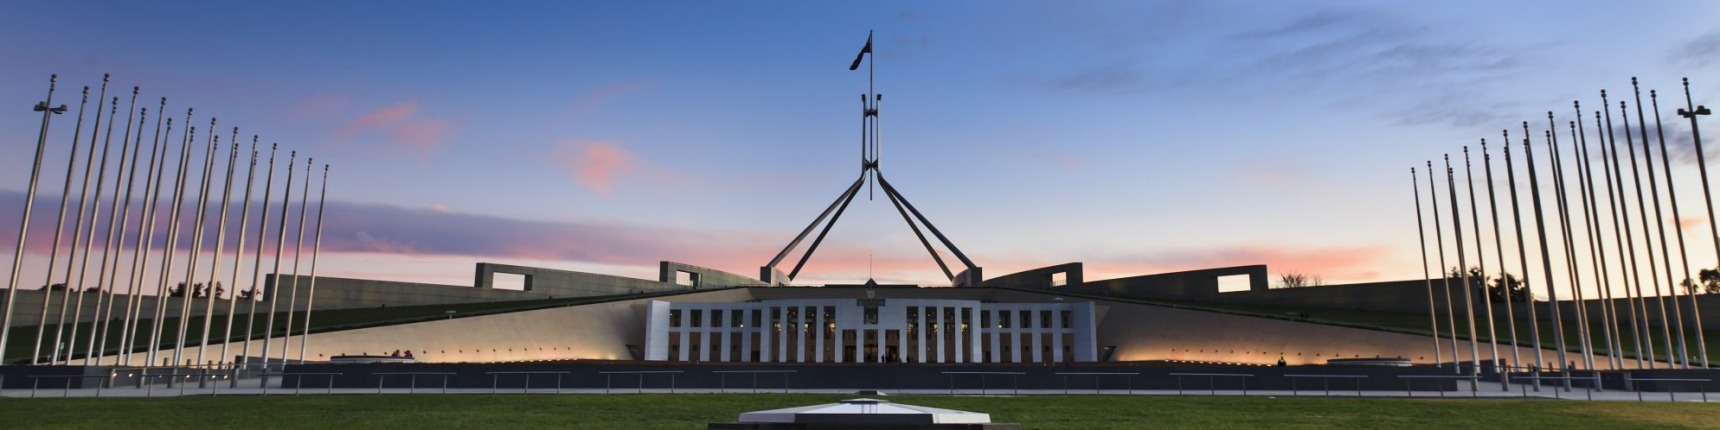 Canberra, Parliament House